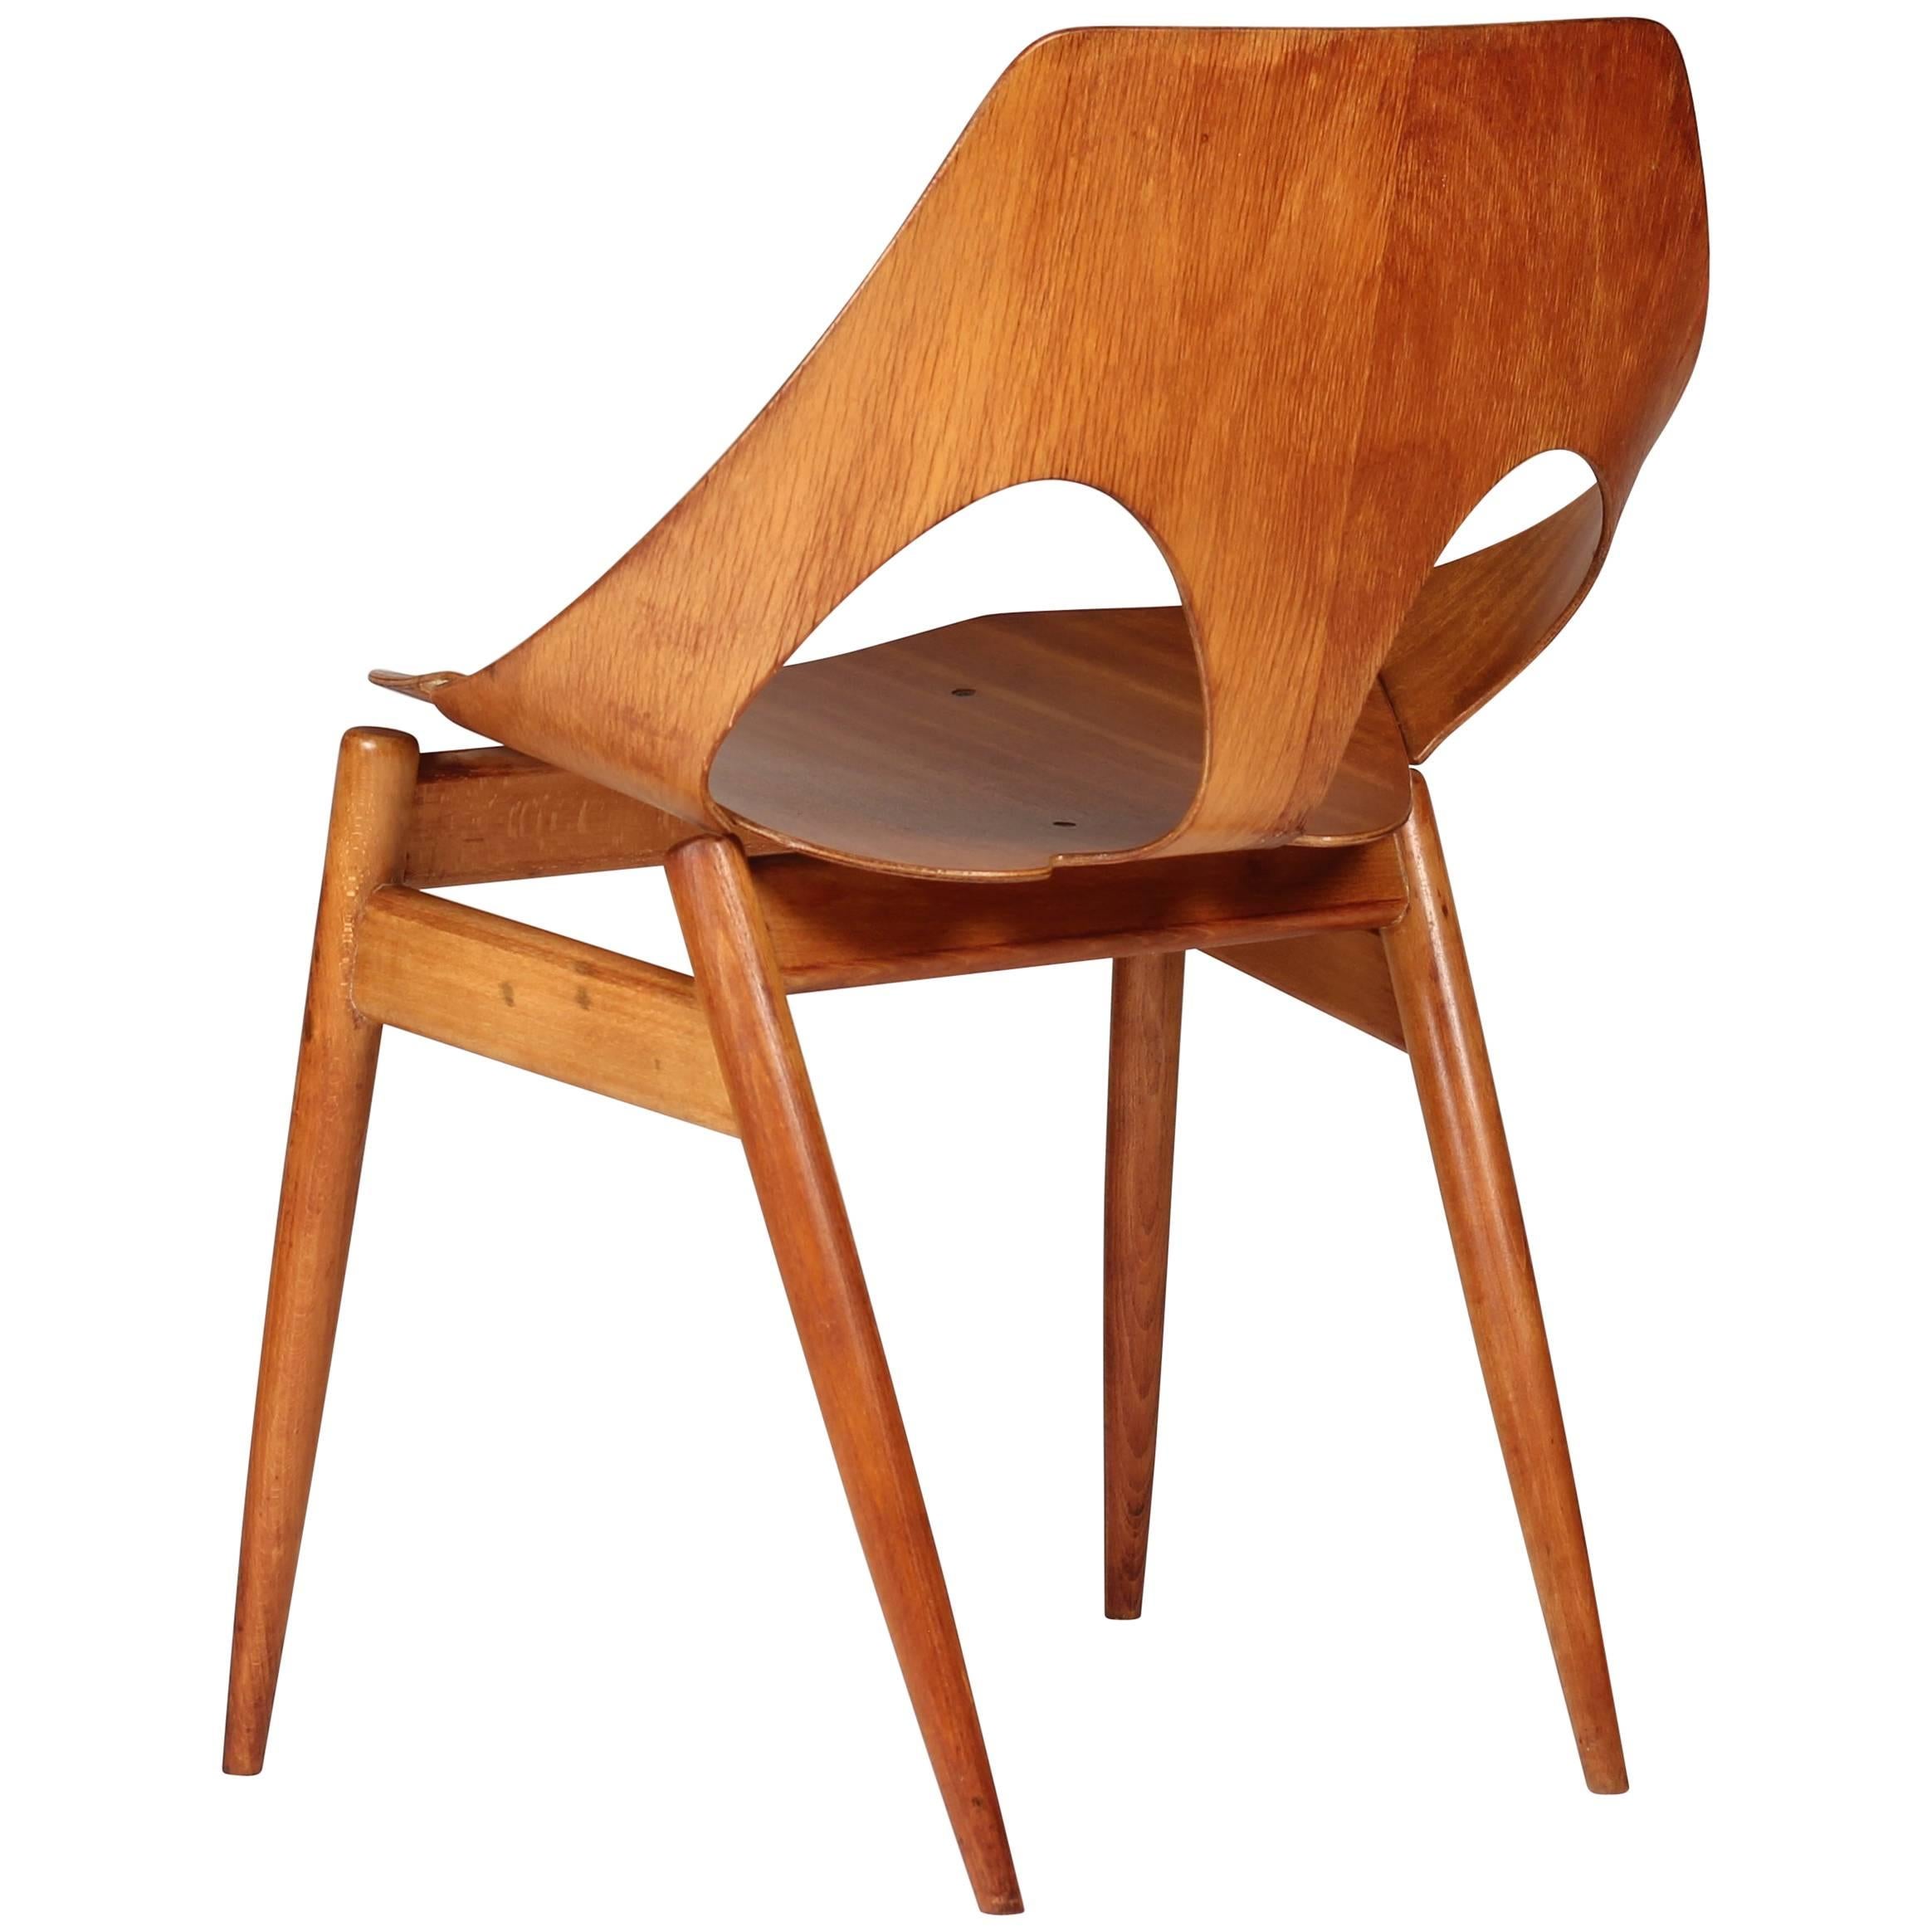 Single Jason Chair by Carl Jacobs